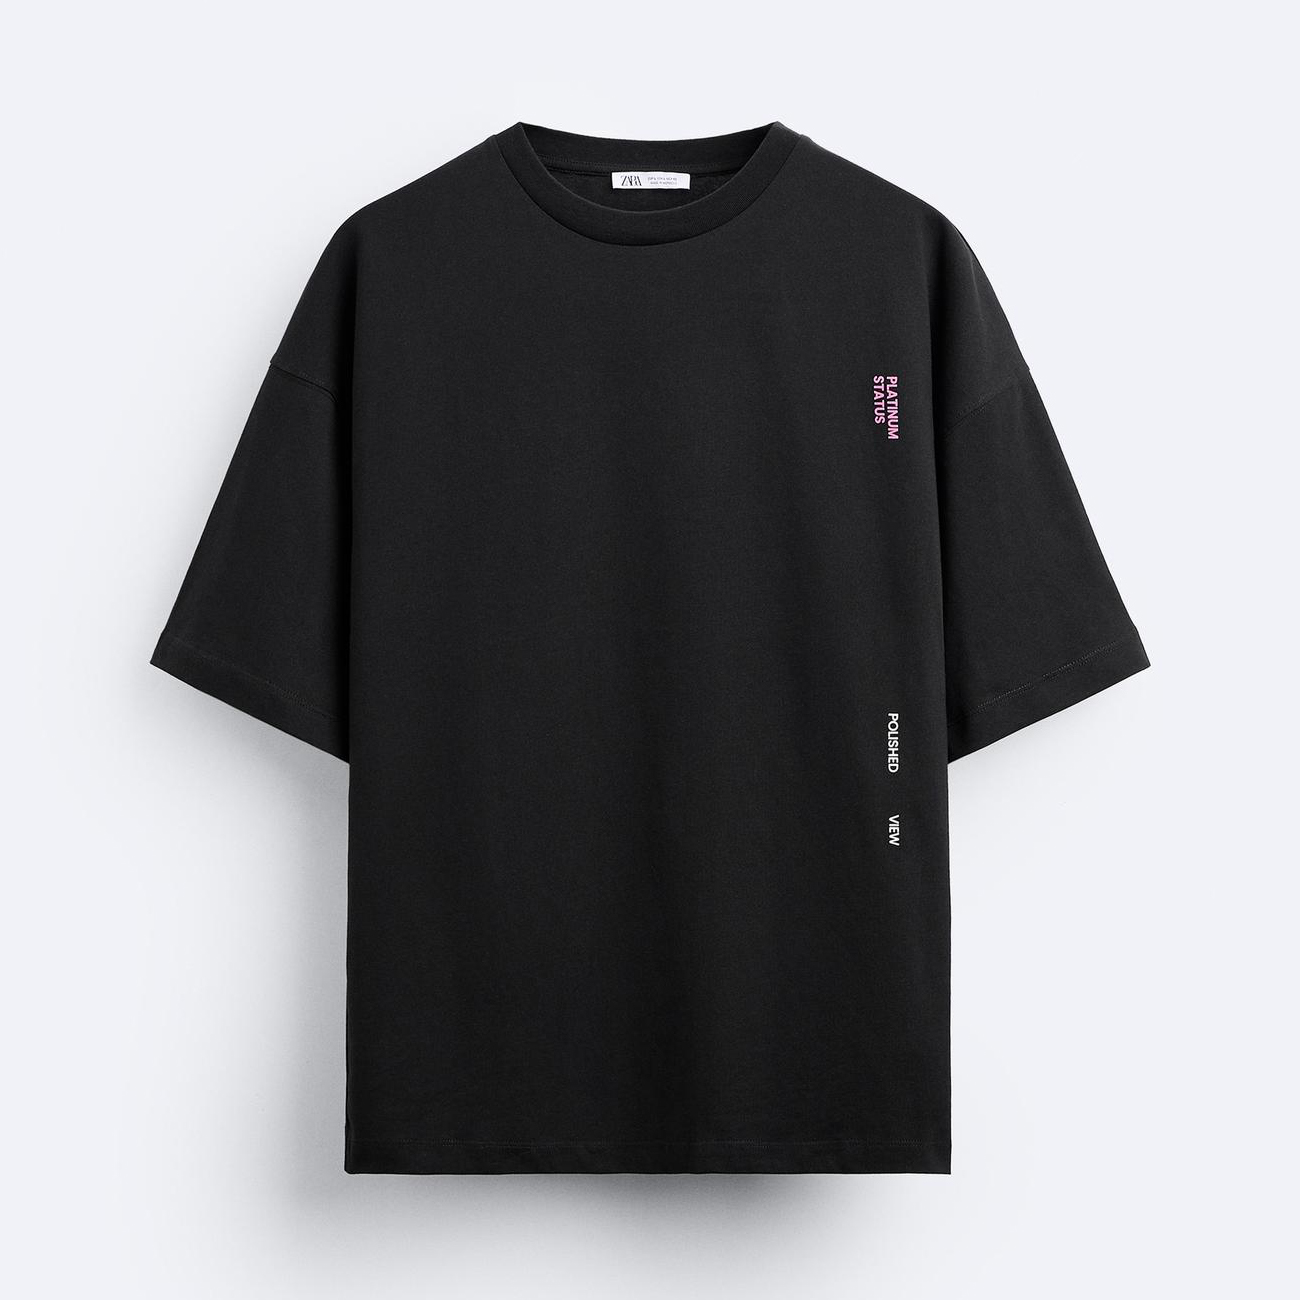 Футболка Zara Contrast Printed, черный футболка zara contrast printed черный